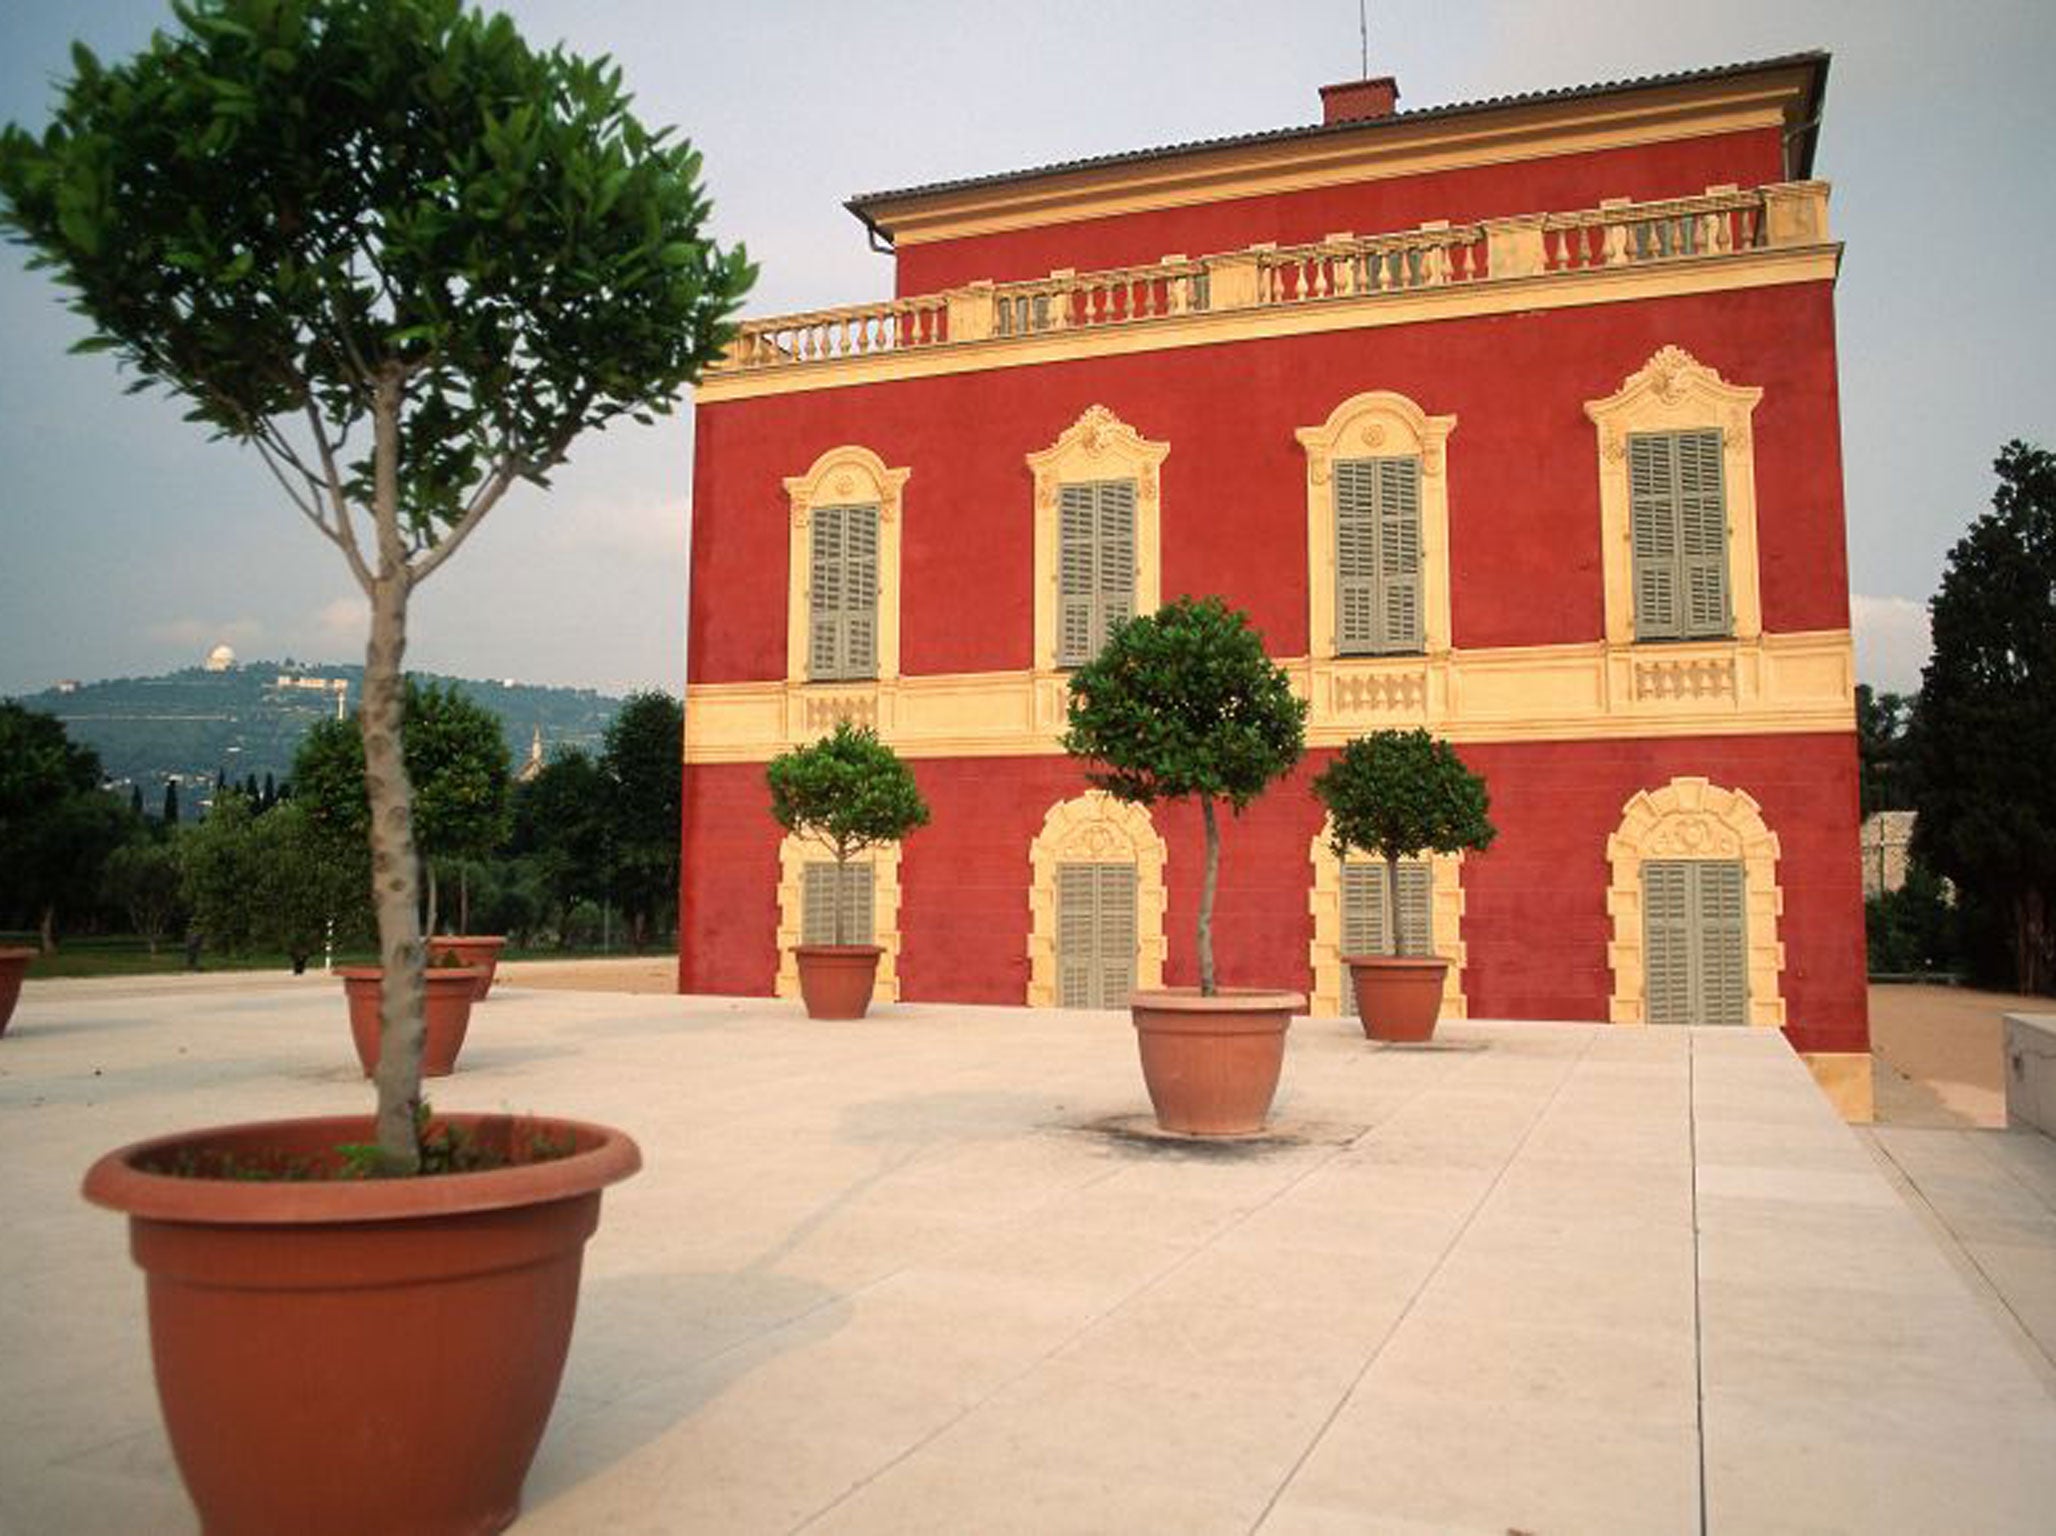 Picture this: Musée Matisse in Cimiez